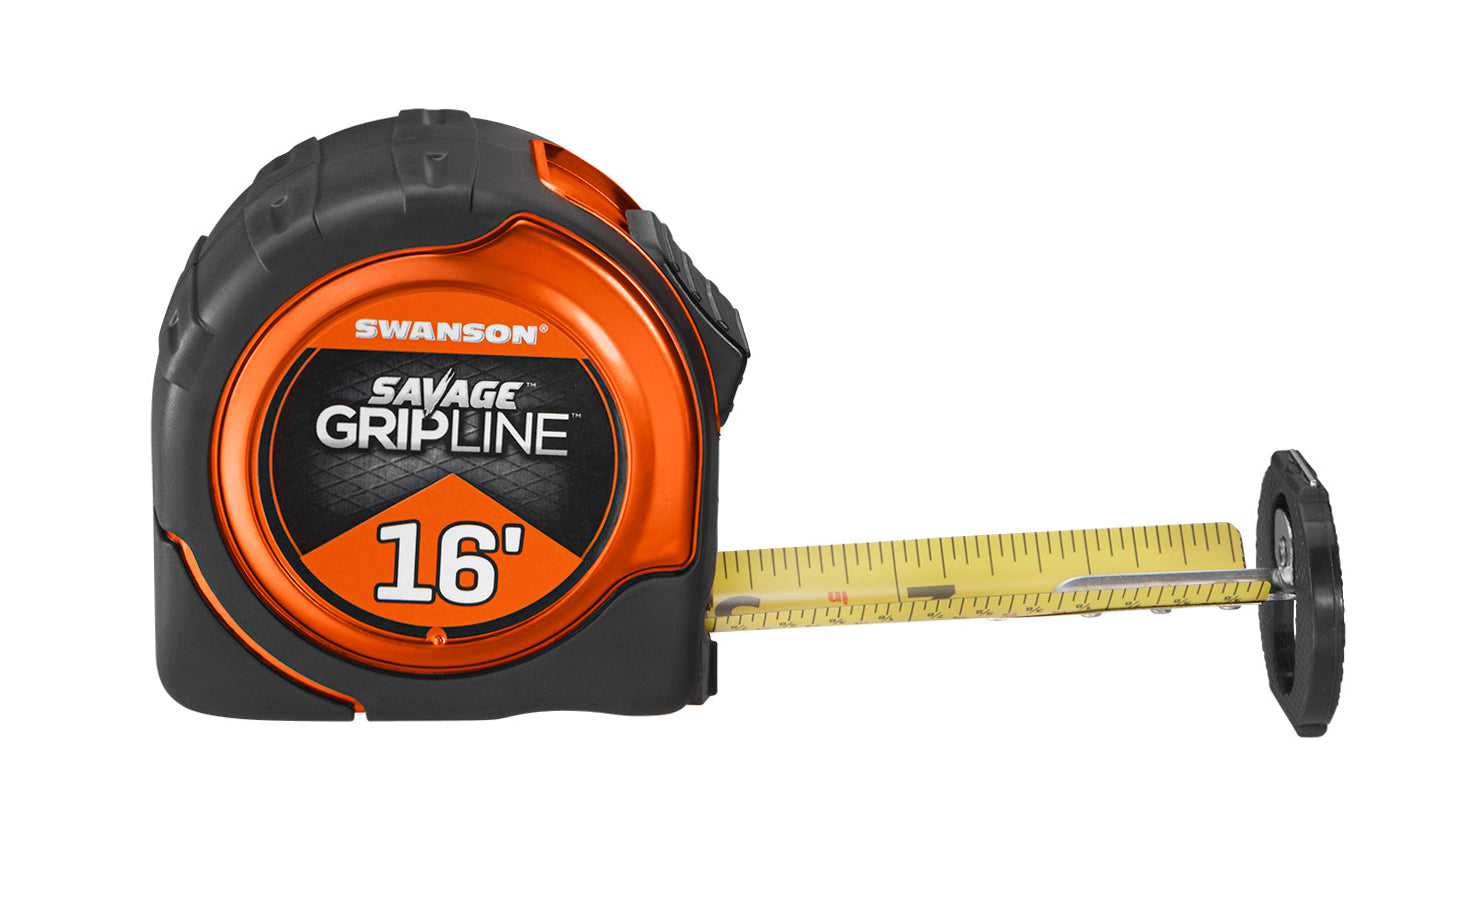 Swanson Savage Gripline 16' Tape Measure ~ Magnetic Tip - Model SVGL16M1 - Grips PVC, Conduit & Pipe up to 2